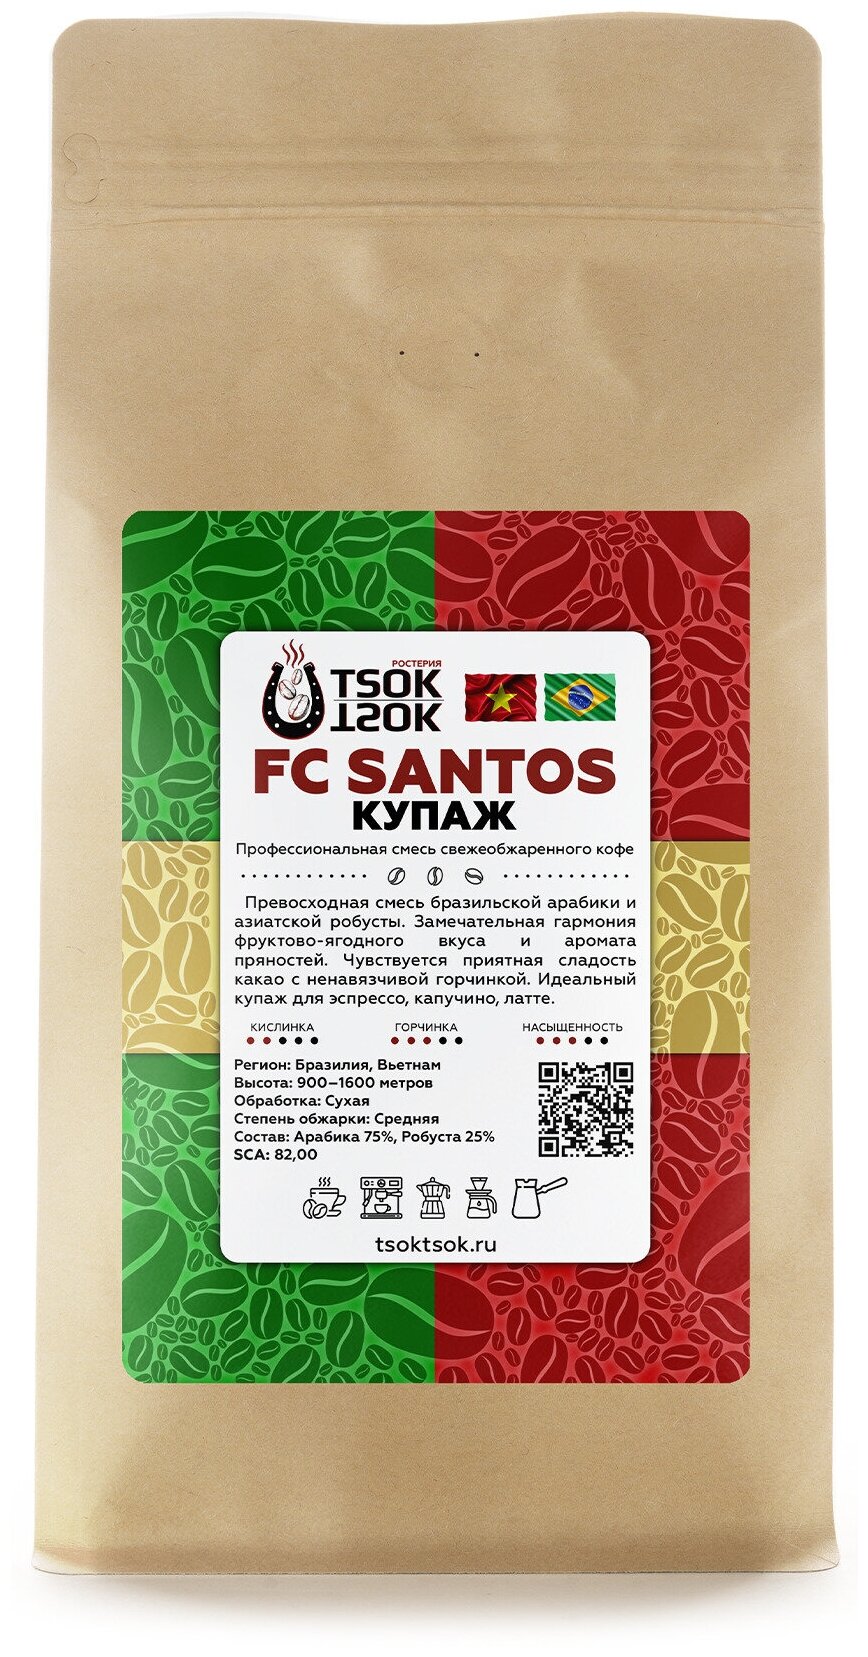 Свежеобжаренный кофе в зернах TSOK TSOK Купаж FC Santos 250 гр